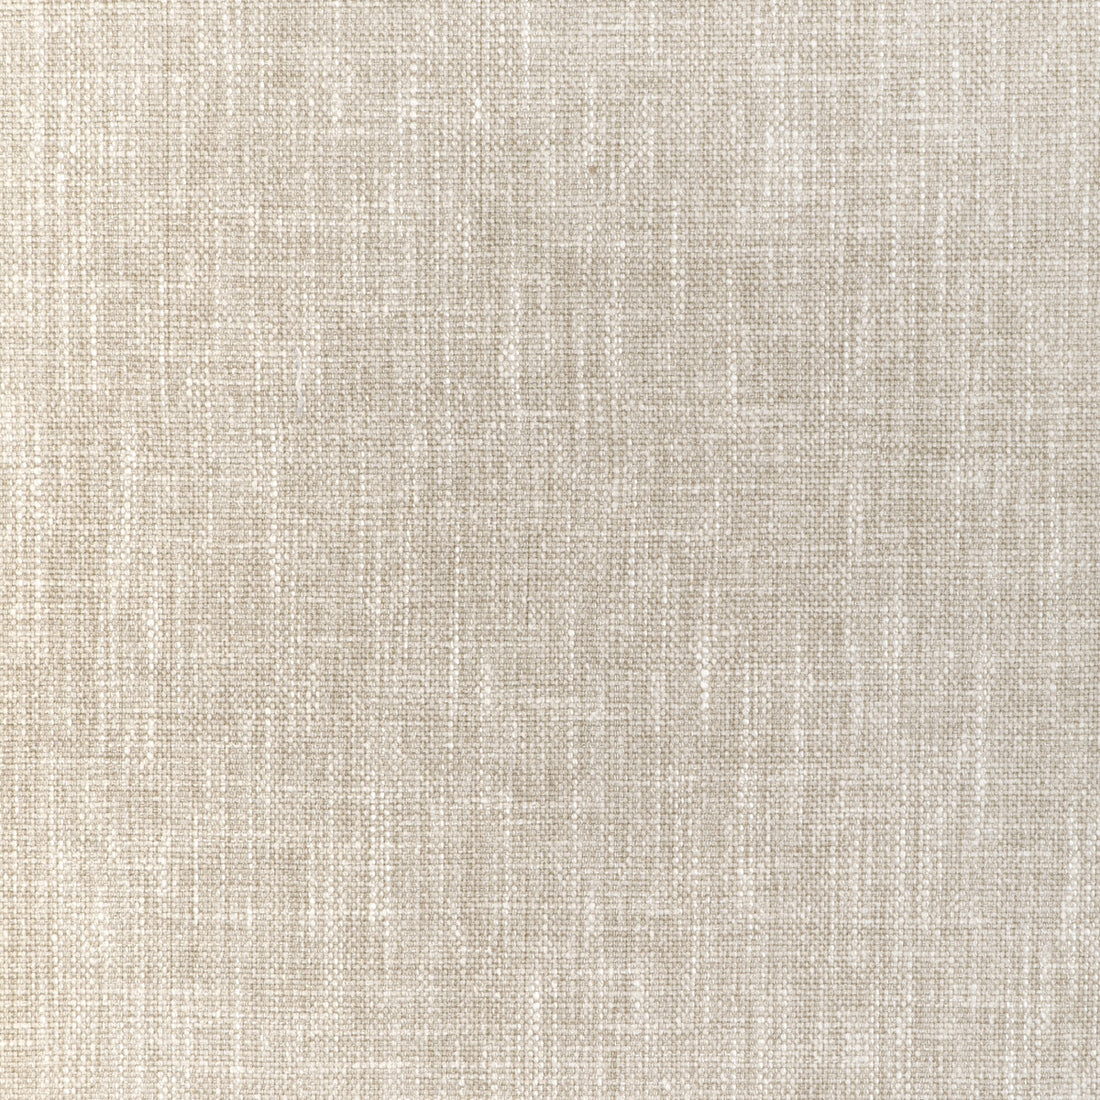 Kravet Smart fabric in 37065-1116 color - pattern 37065.1116.0 - by Kravet Smart